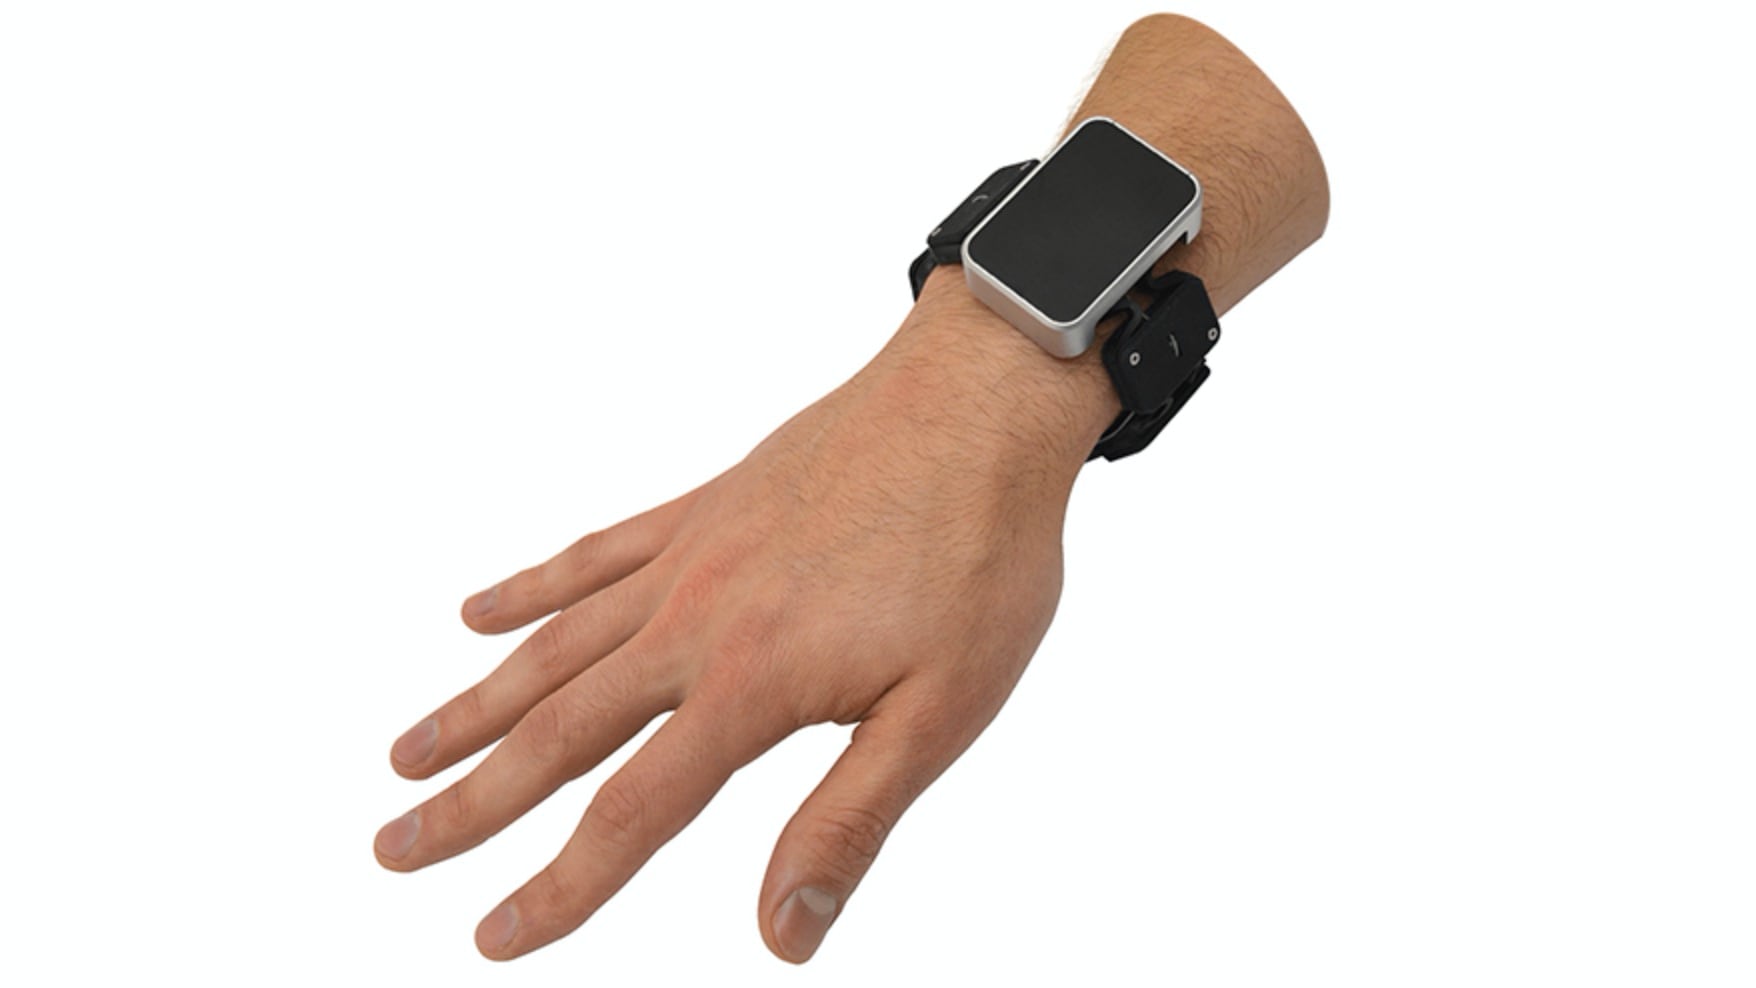 Facebook Tasbi haptic feedback wristband prototype